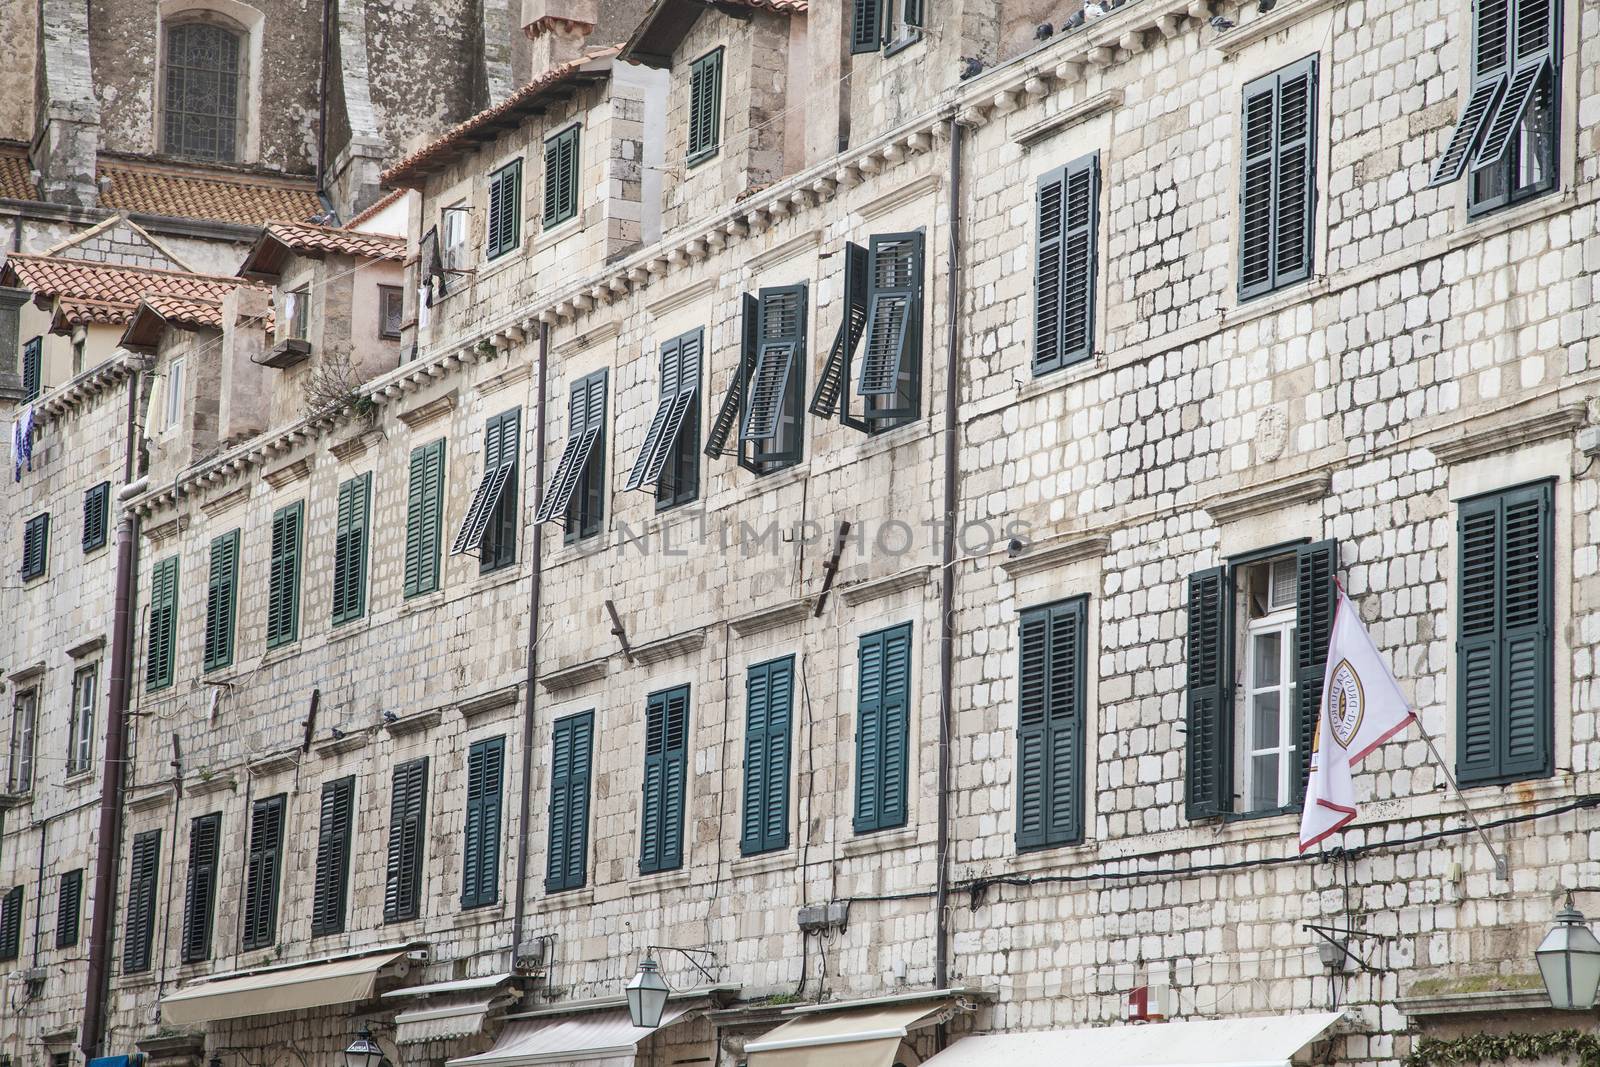 Details of Dubrovnik's residential buildings.